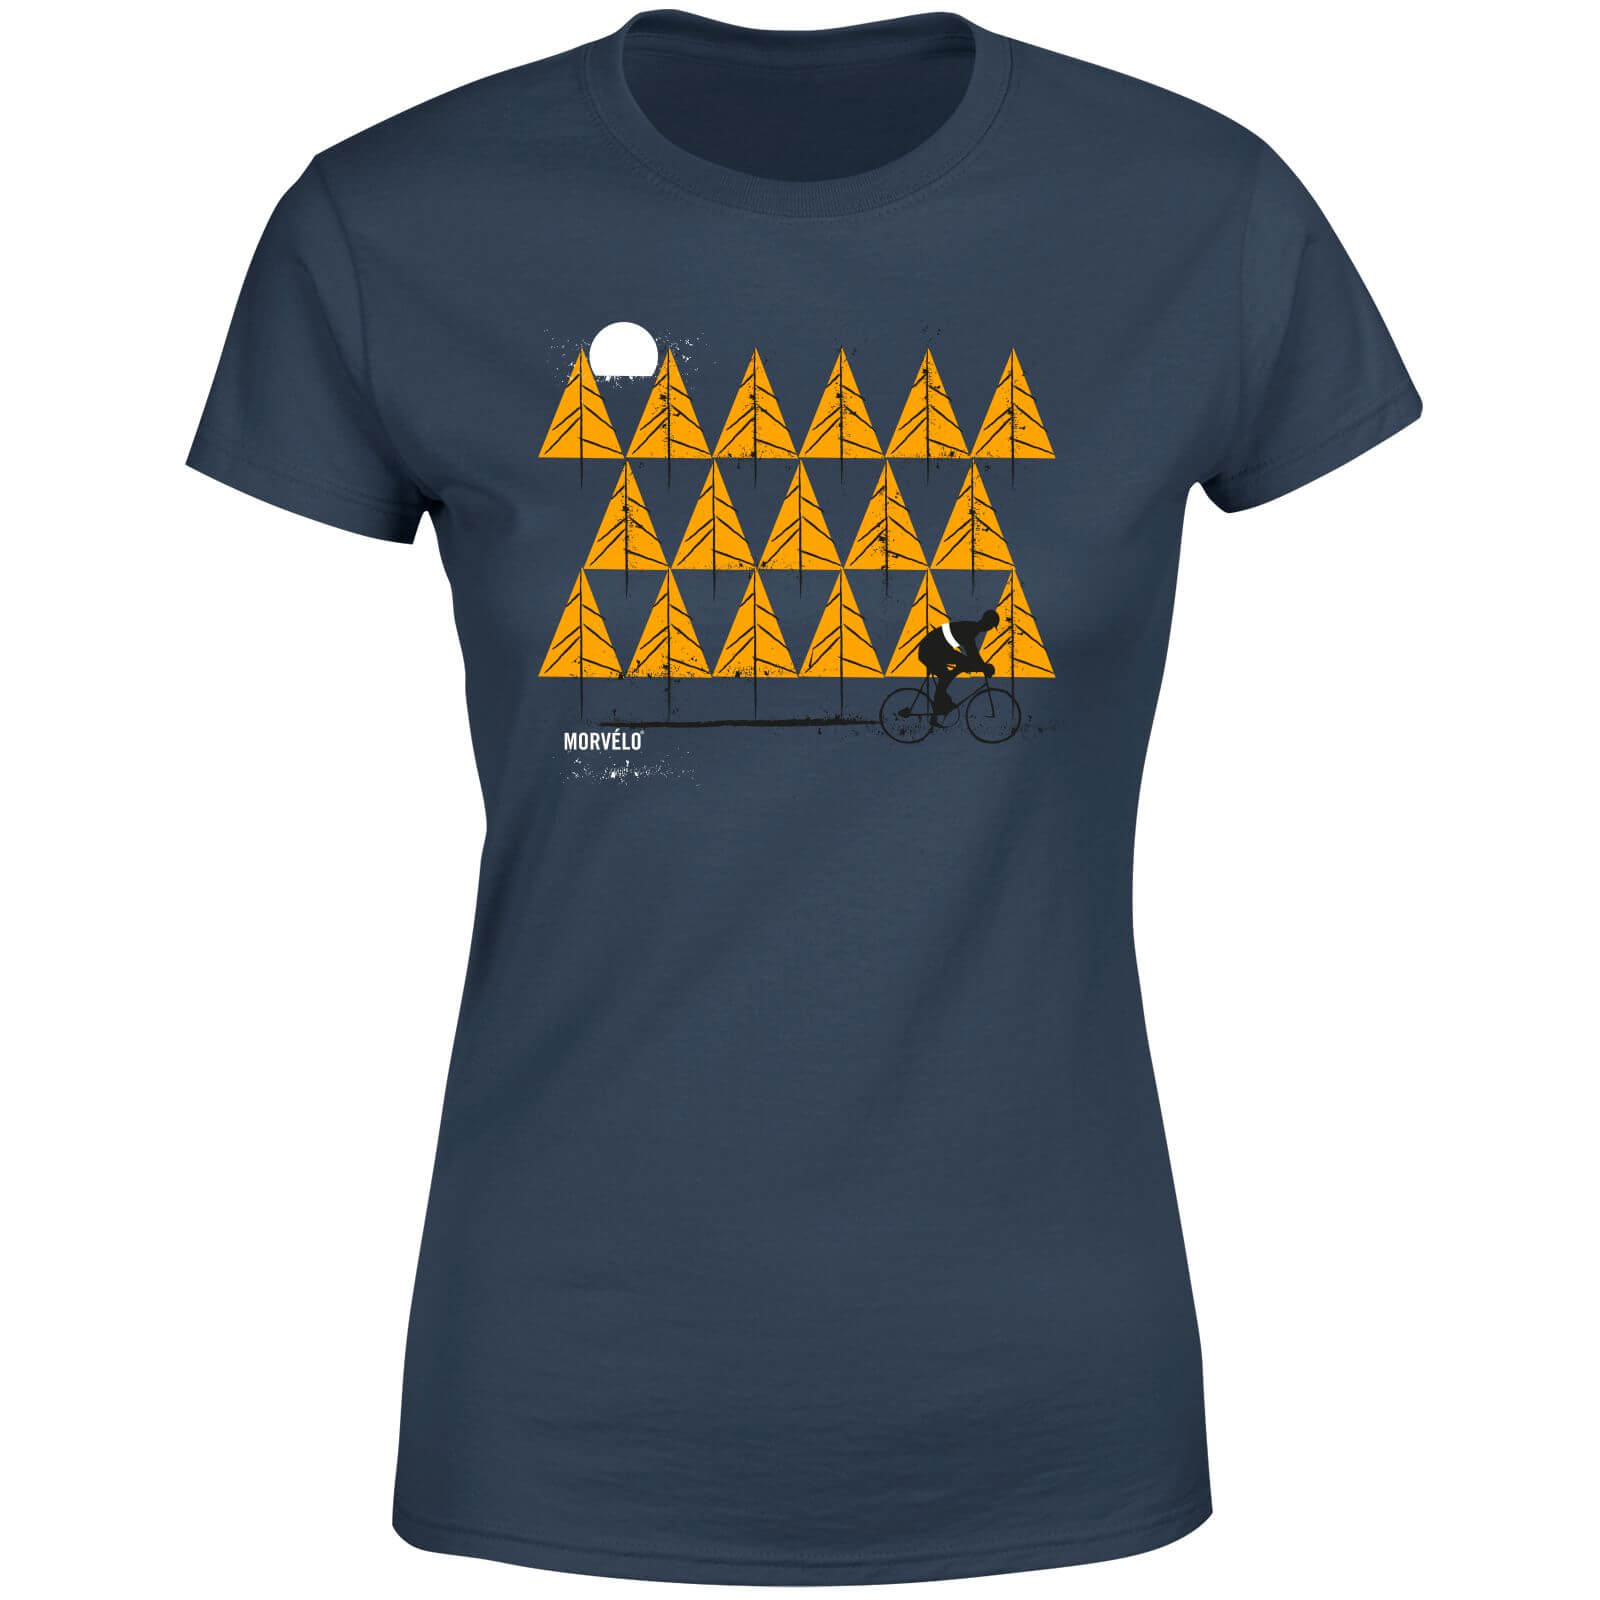 Morvelo Homeward Women's T-Shirt - Navy - XS - Navy